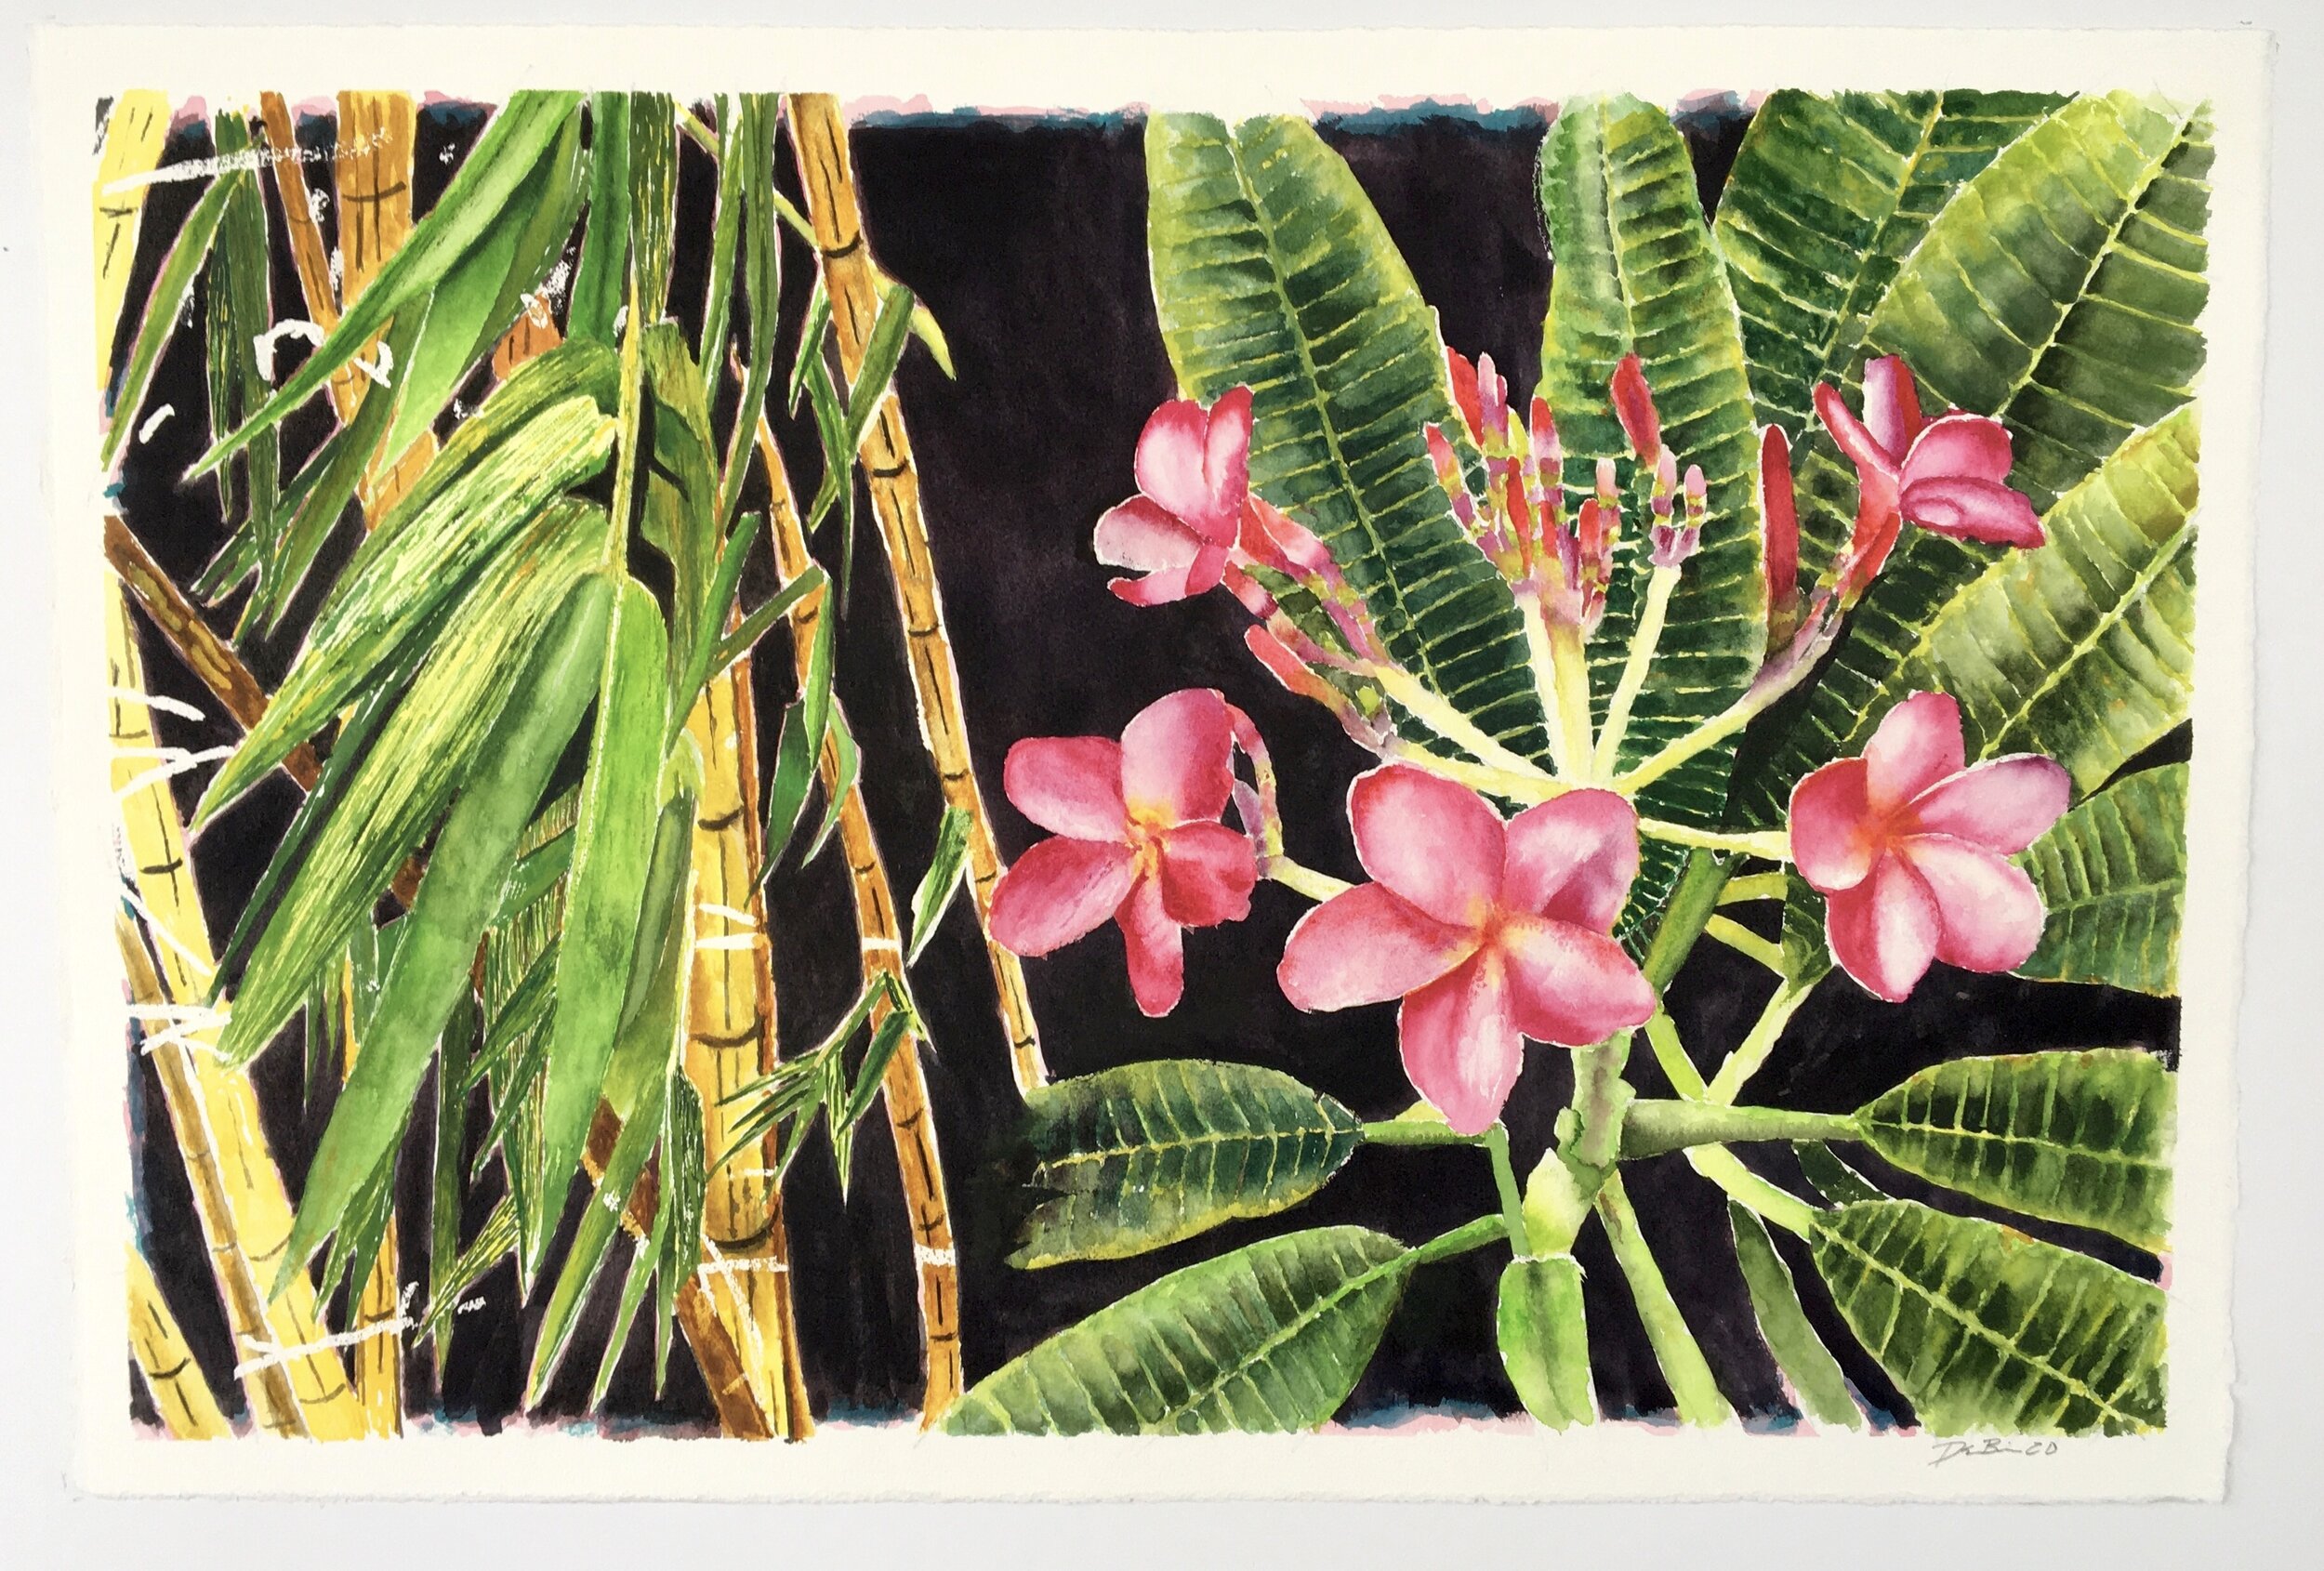 The Bamboo and Frangipani 22x15" on 140lb Lanaquarelle Paper